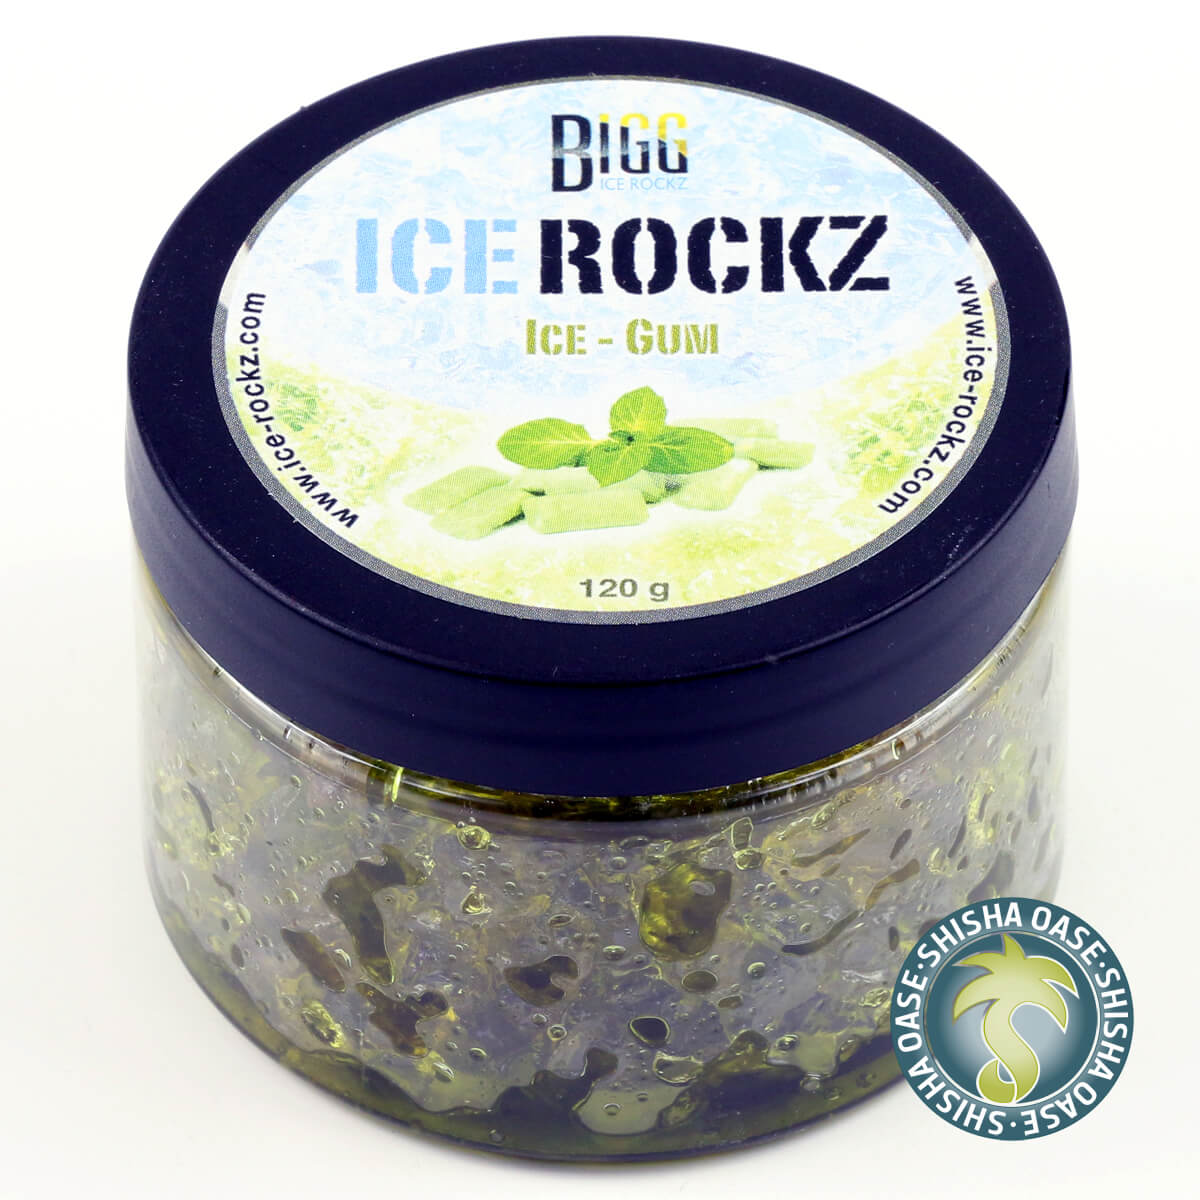 Bigg Ice Rockz - Ice Gum 120g